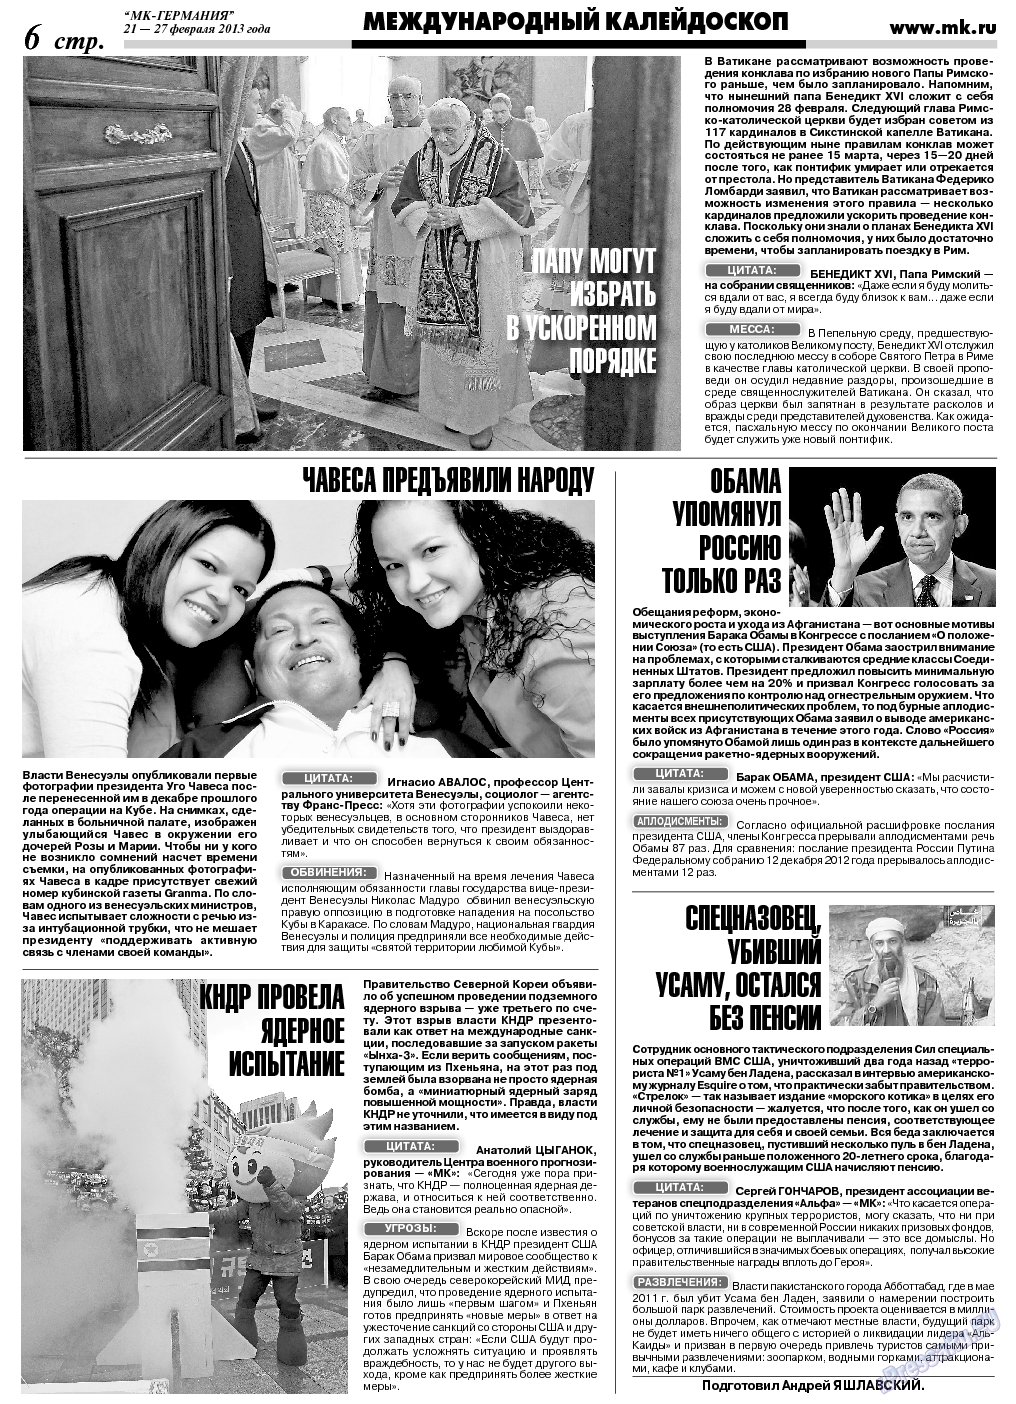 МК-Германия, газета. 2013 №8 стр.6